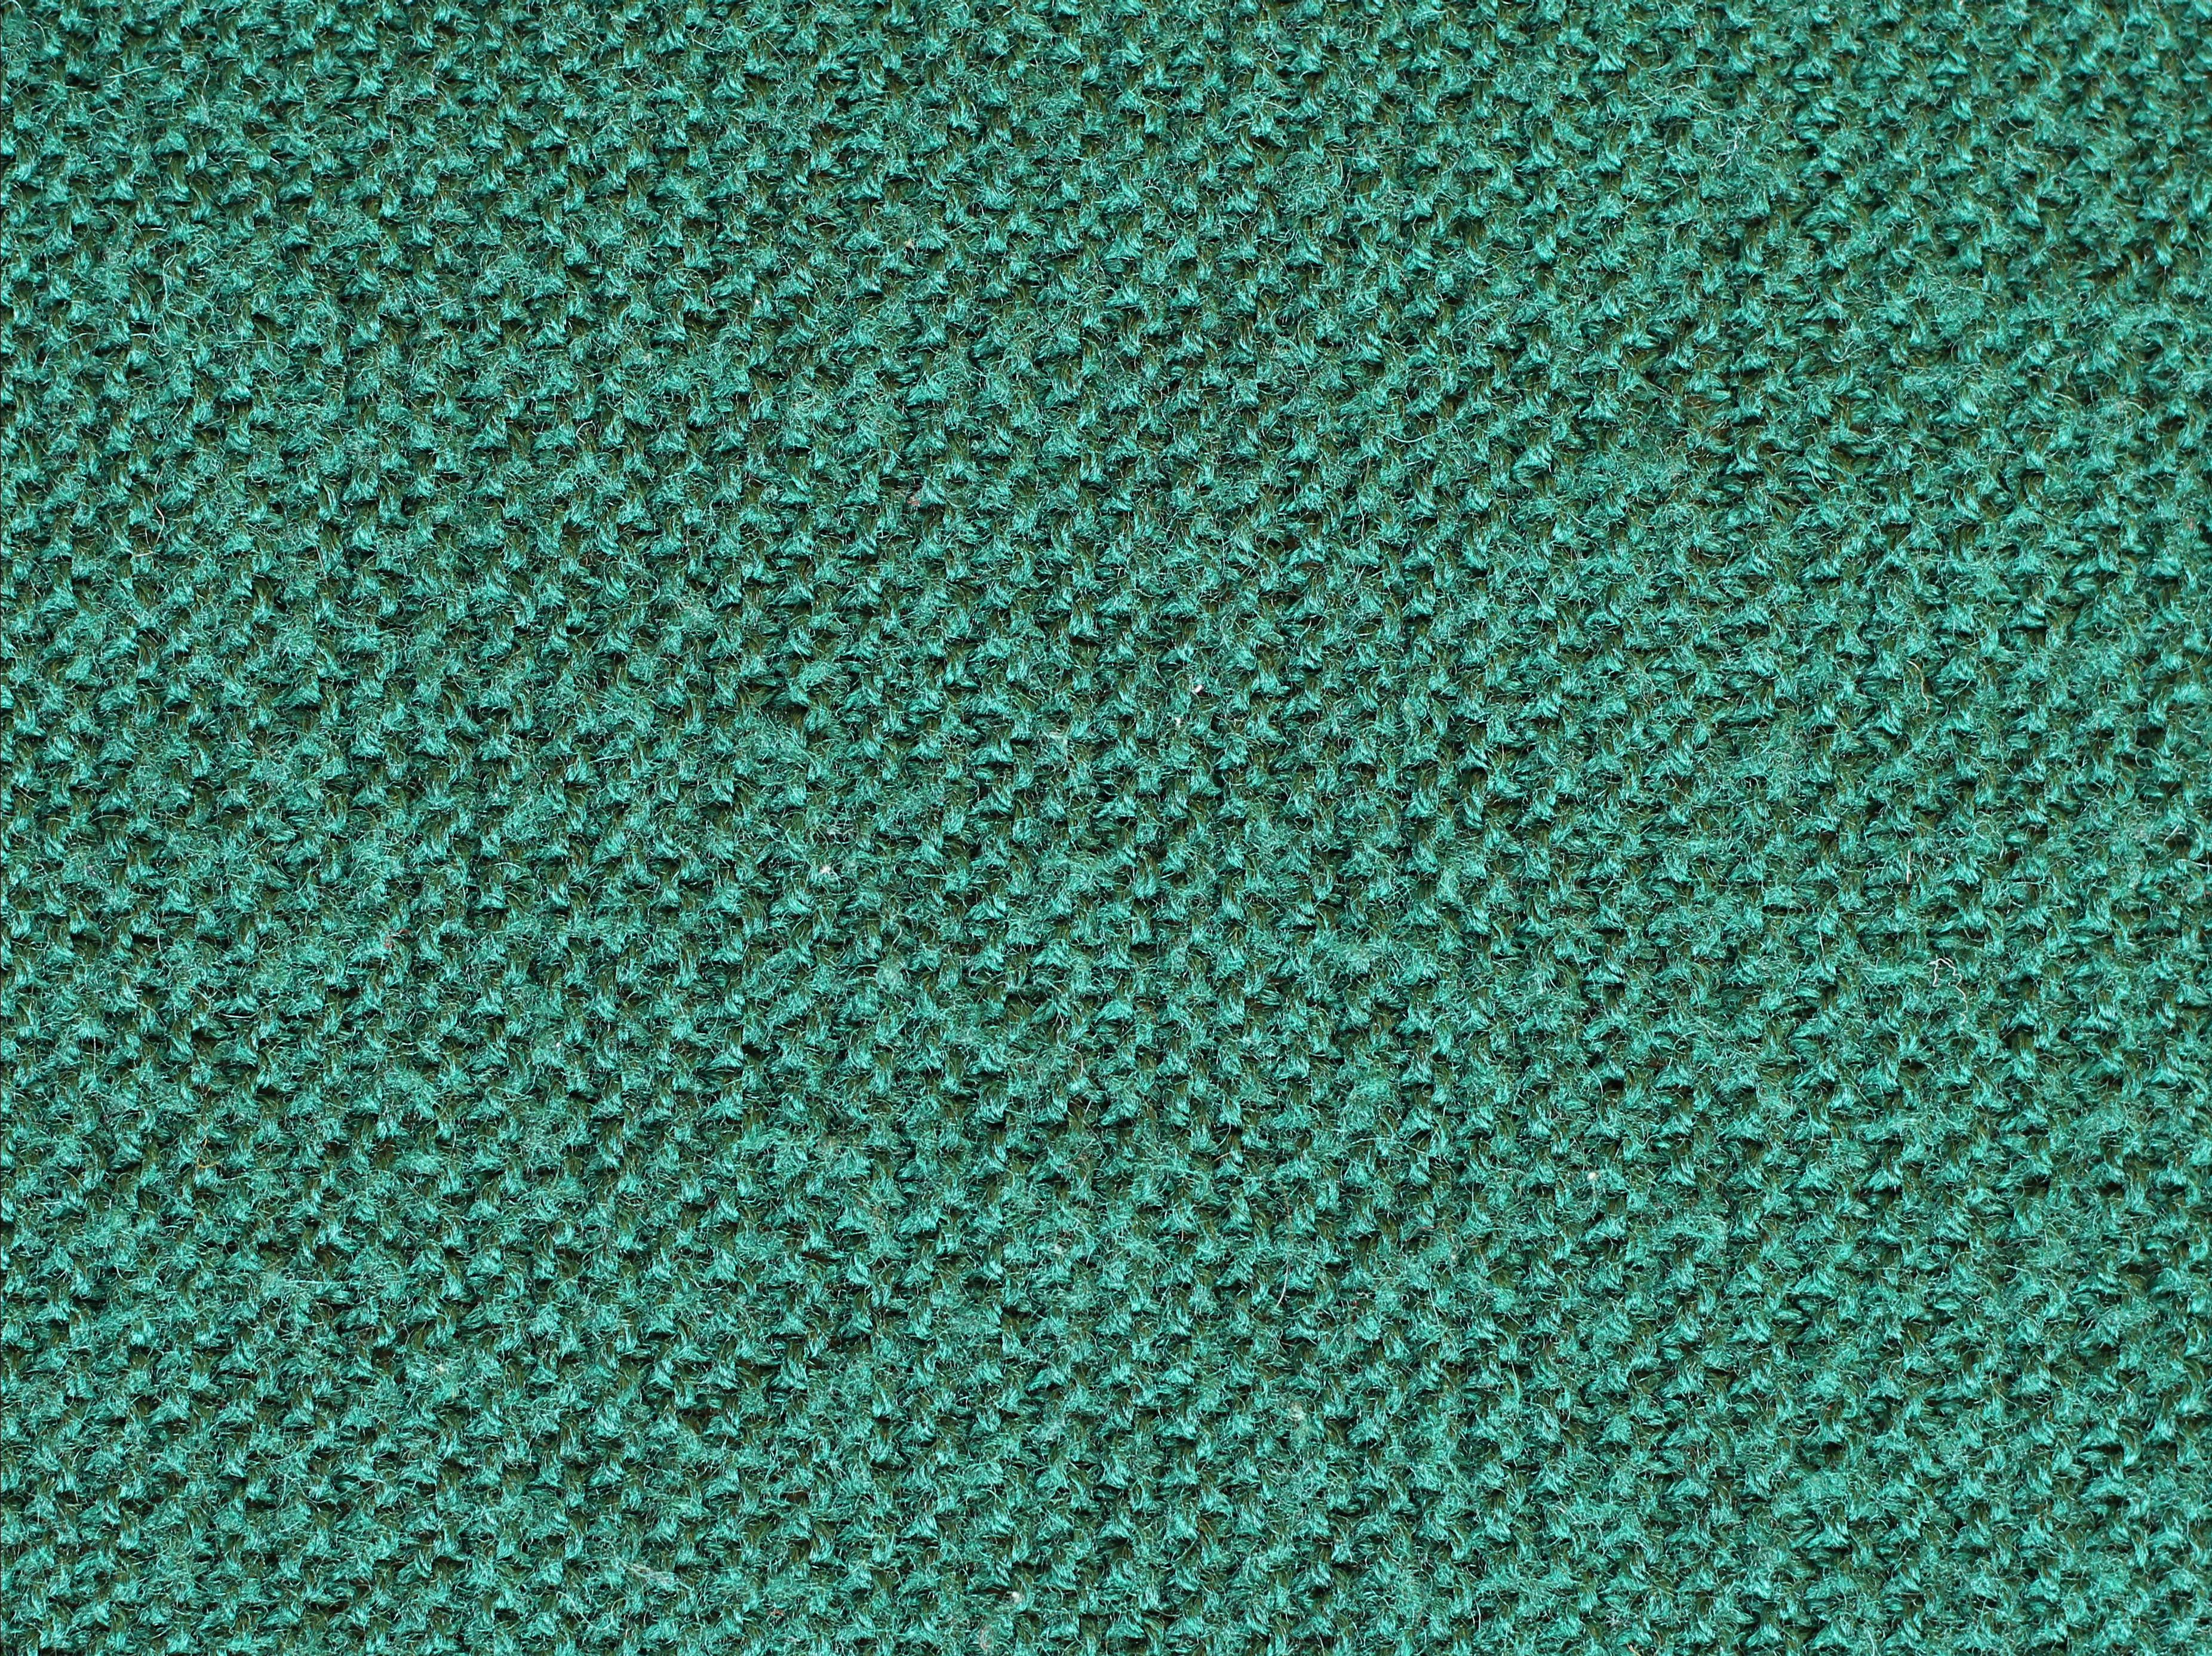 File:Green wool texture.jpg - Wikimedia Commons